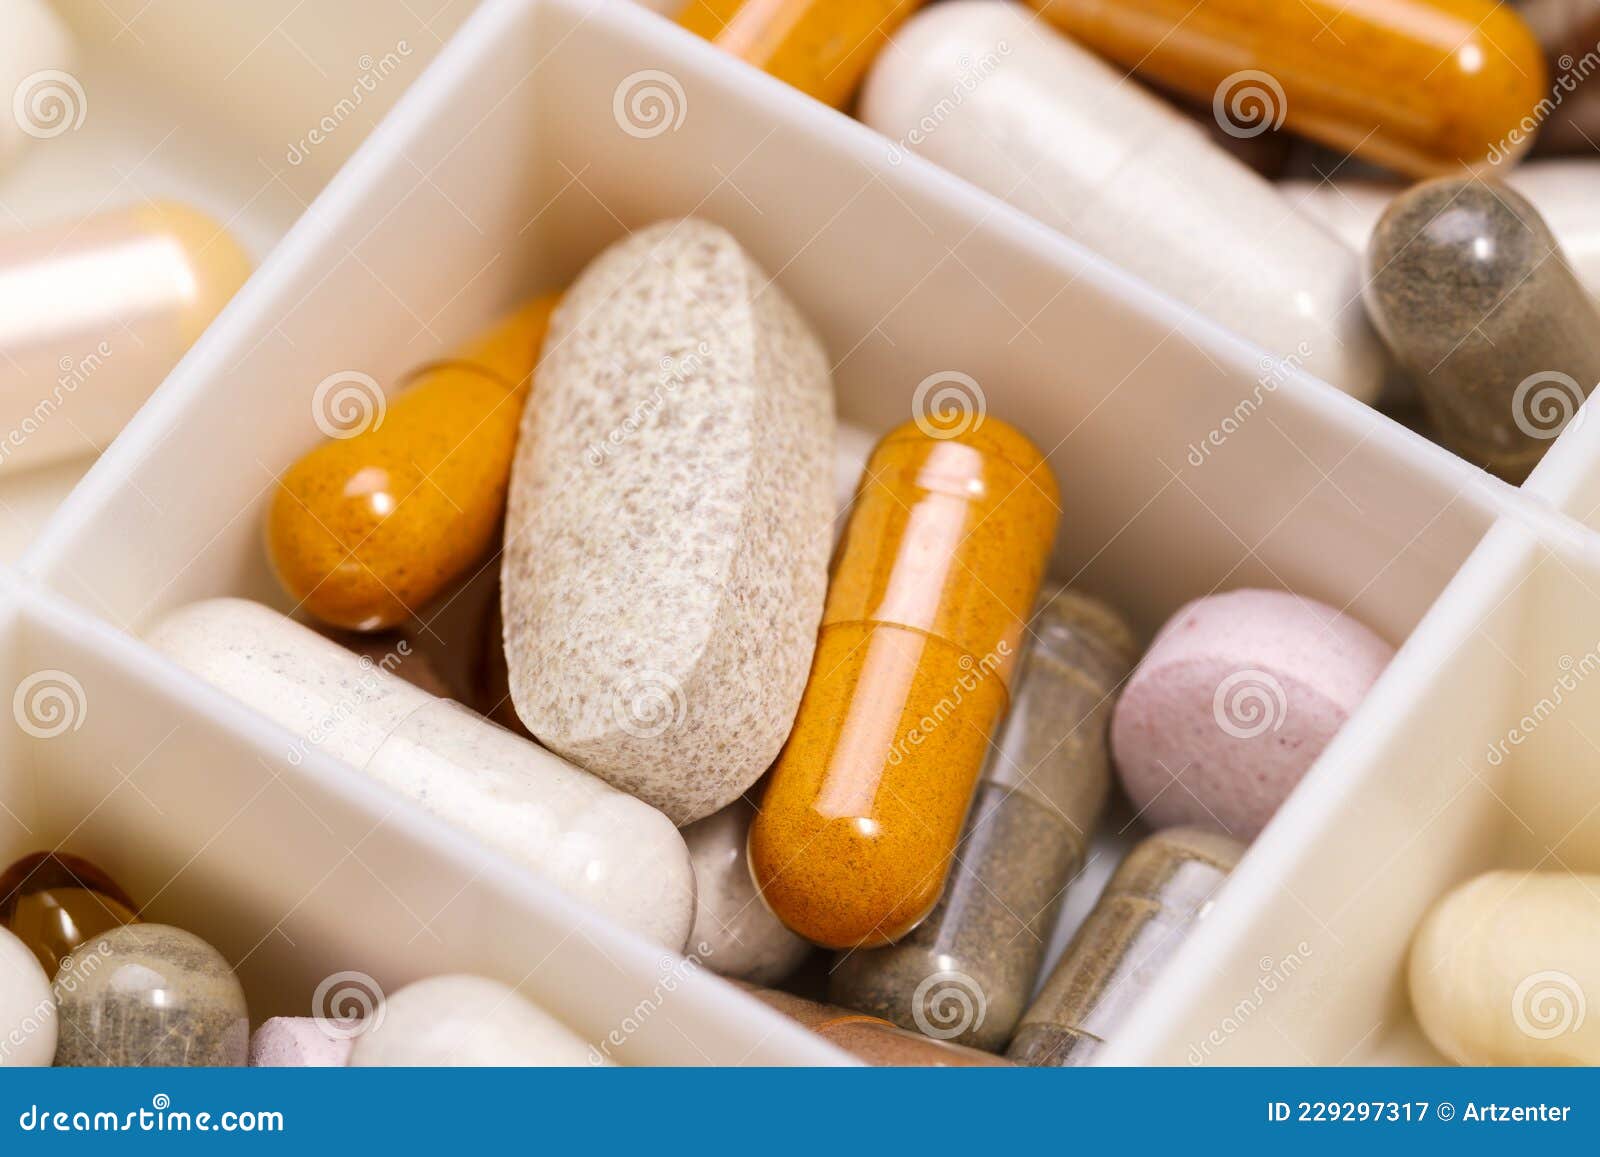 https://thumbs.dreamstime.com/z/organizador-de-medicamentos-pl%C3%A1sticos-con-p%C3%ADldoras-y-c%C3%A1psulas-la-medicina-pl%C3%A1stica-para-salud-atenci%C3%B3n-m%C3%A9dica-farmac%C3%A9utica-229297317.jpg